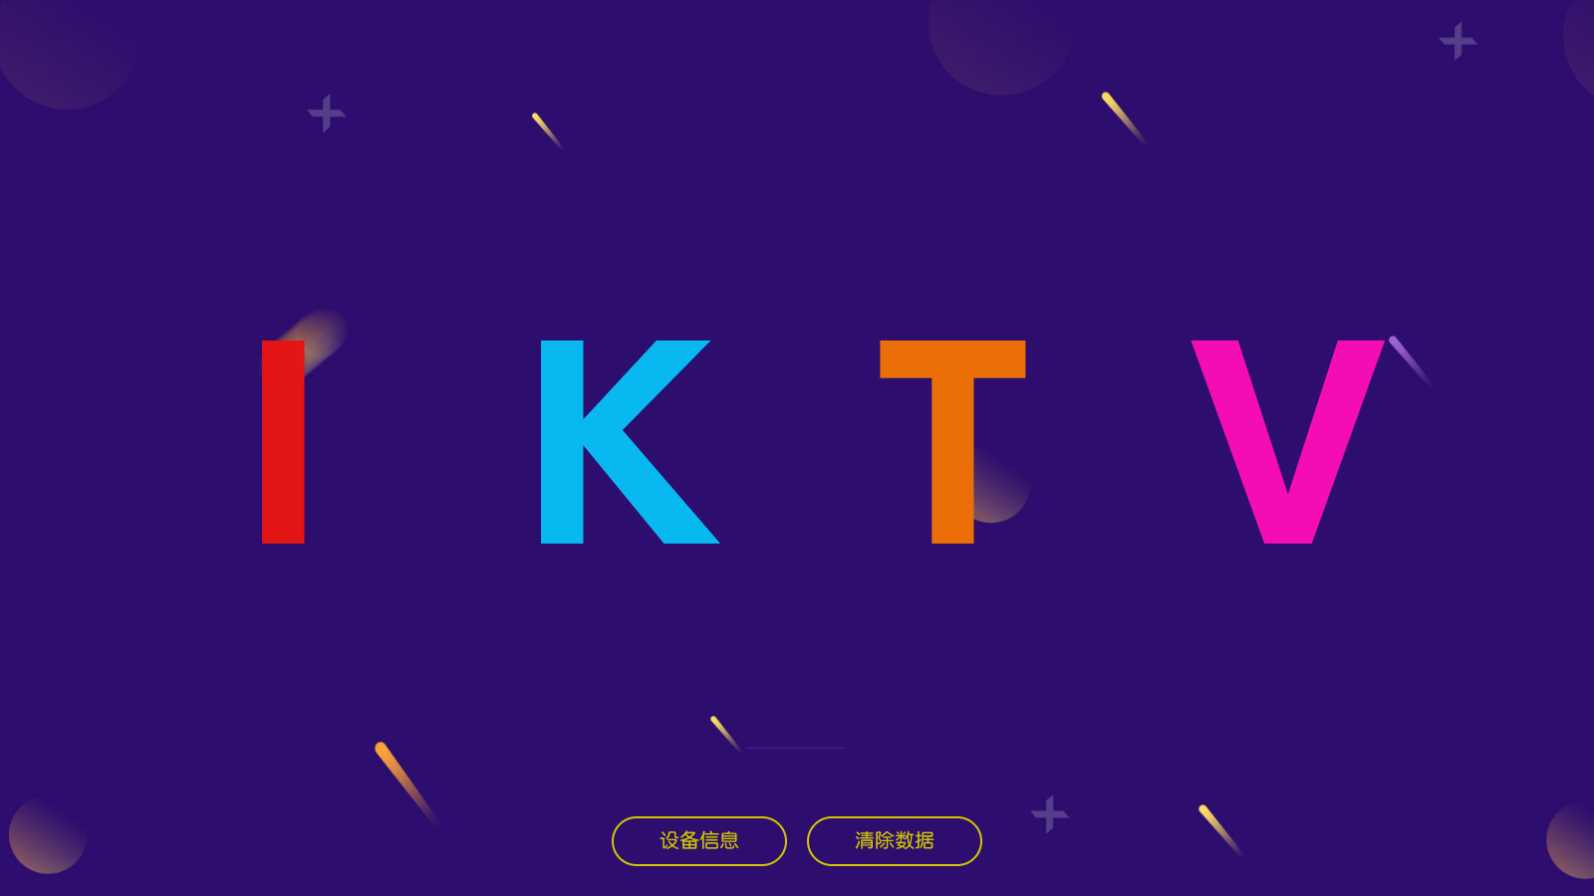 IKTV_50.0.0，拥有庞大的曲库资源，且保持定期更新！